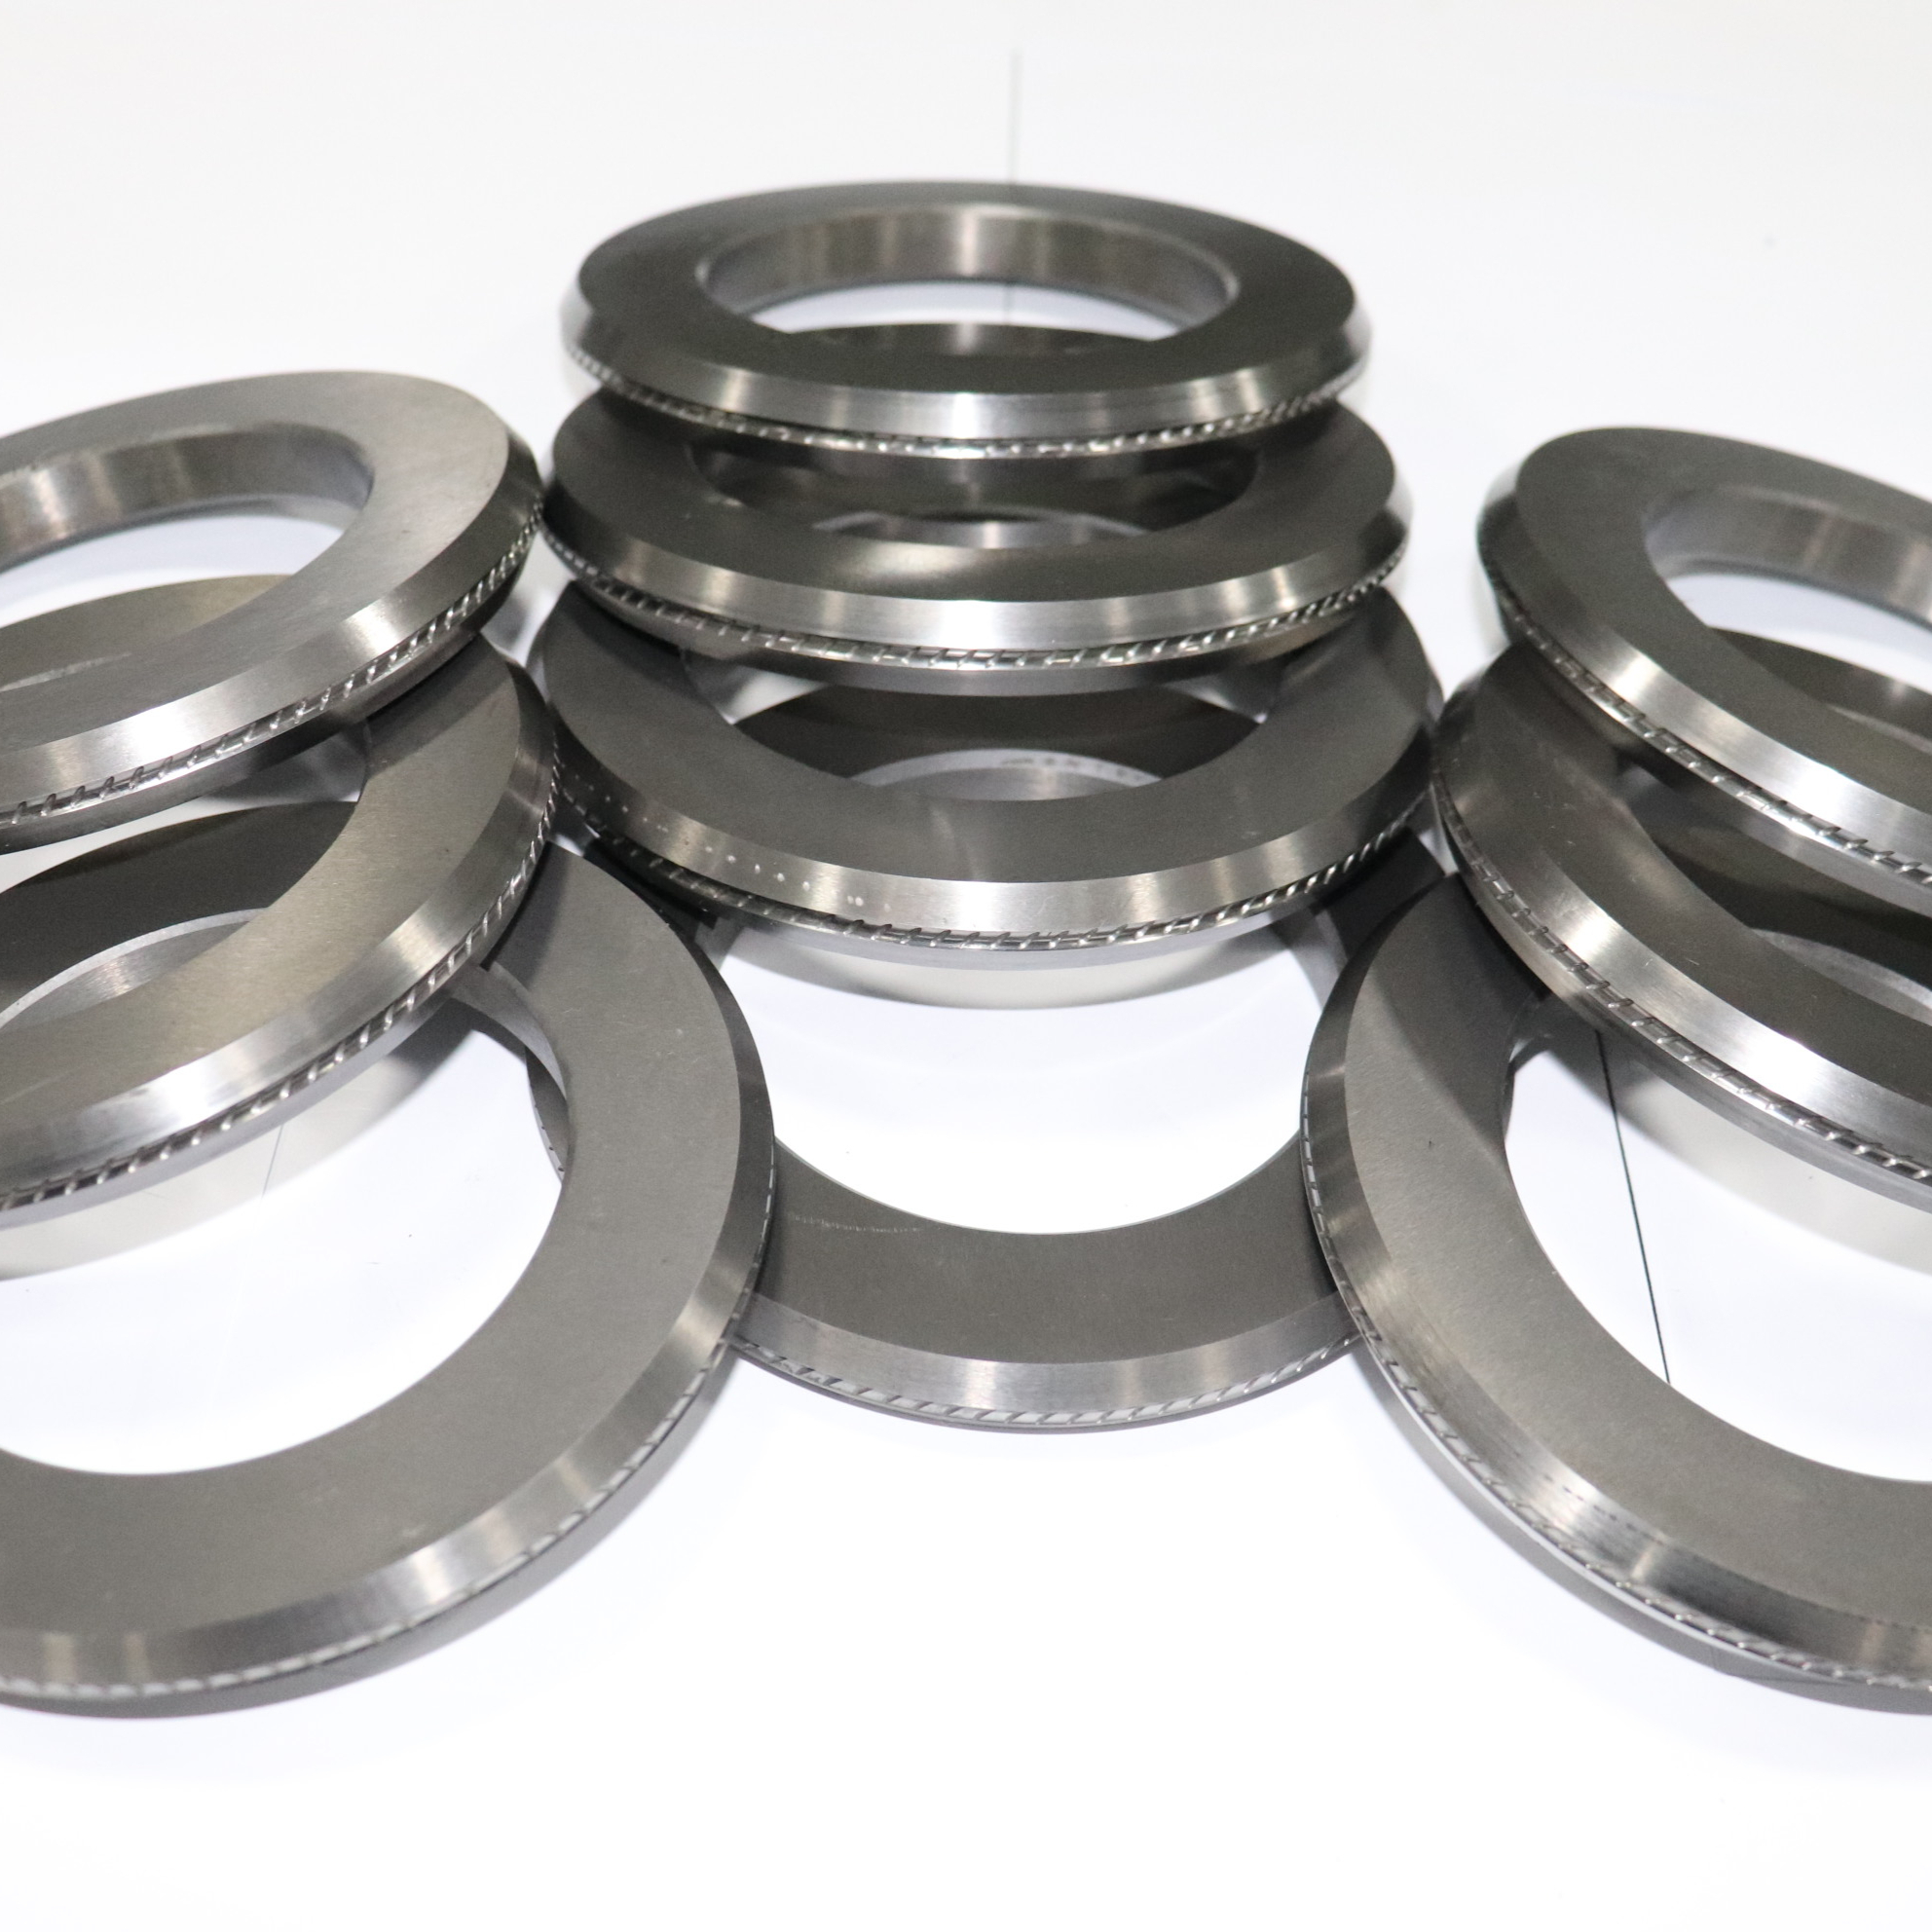 I-tungsten carbide roller ring